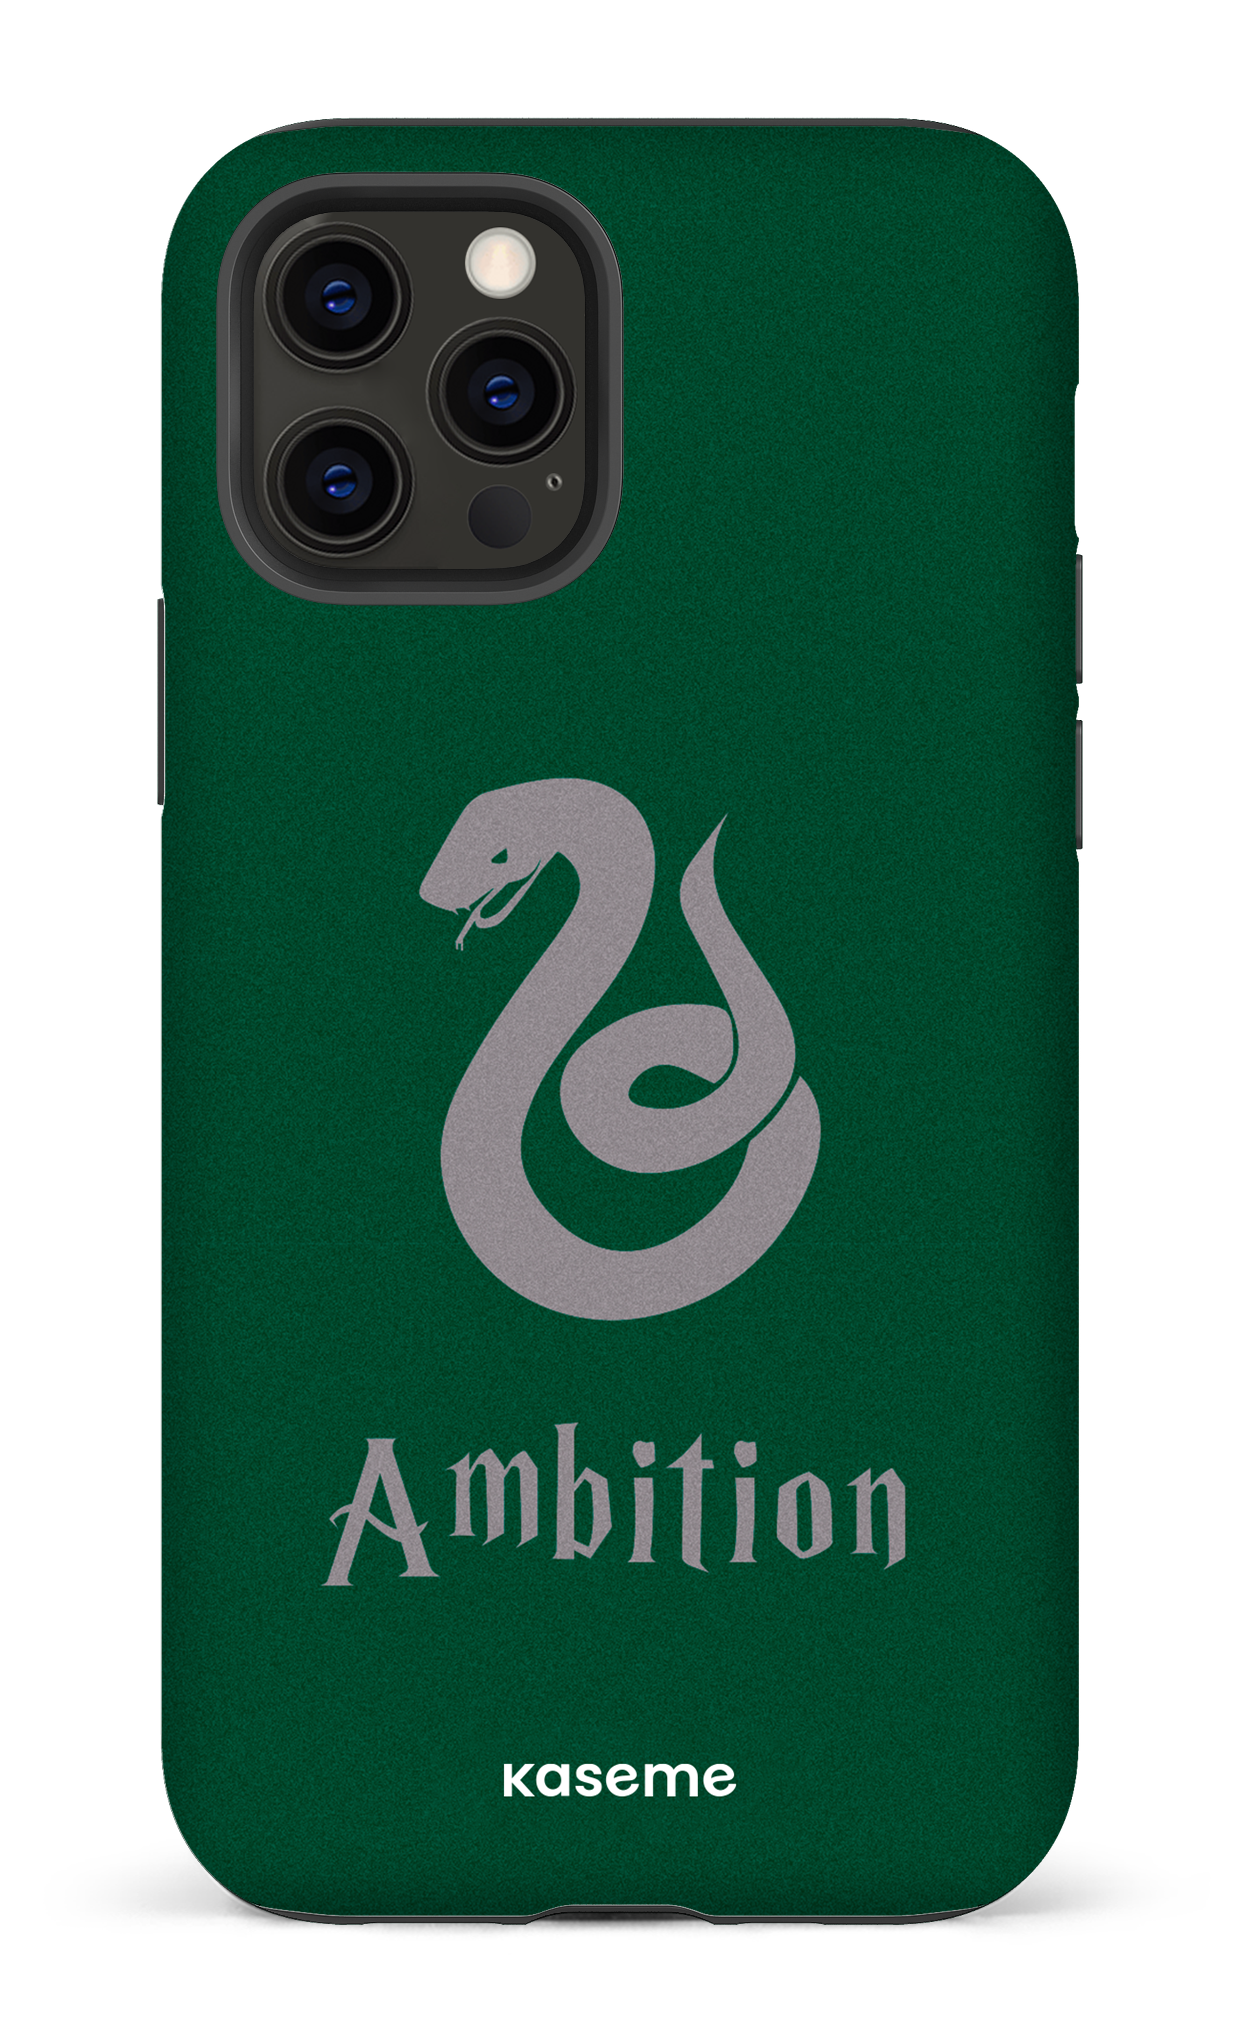 Ambition - iPhone 12 Pro